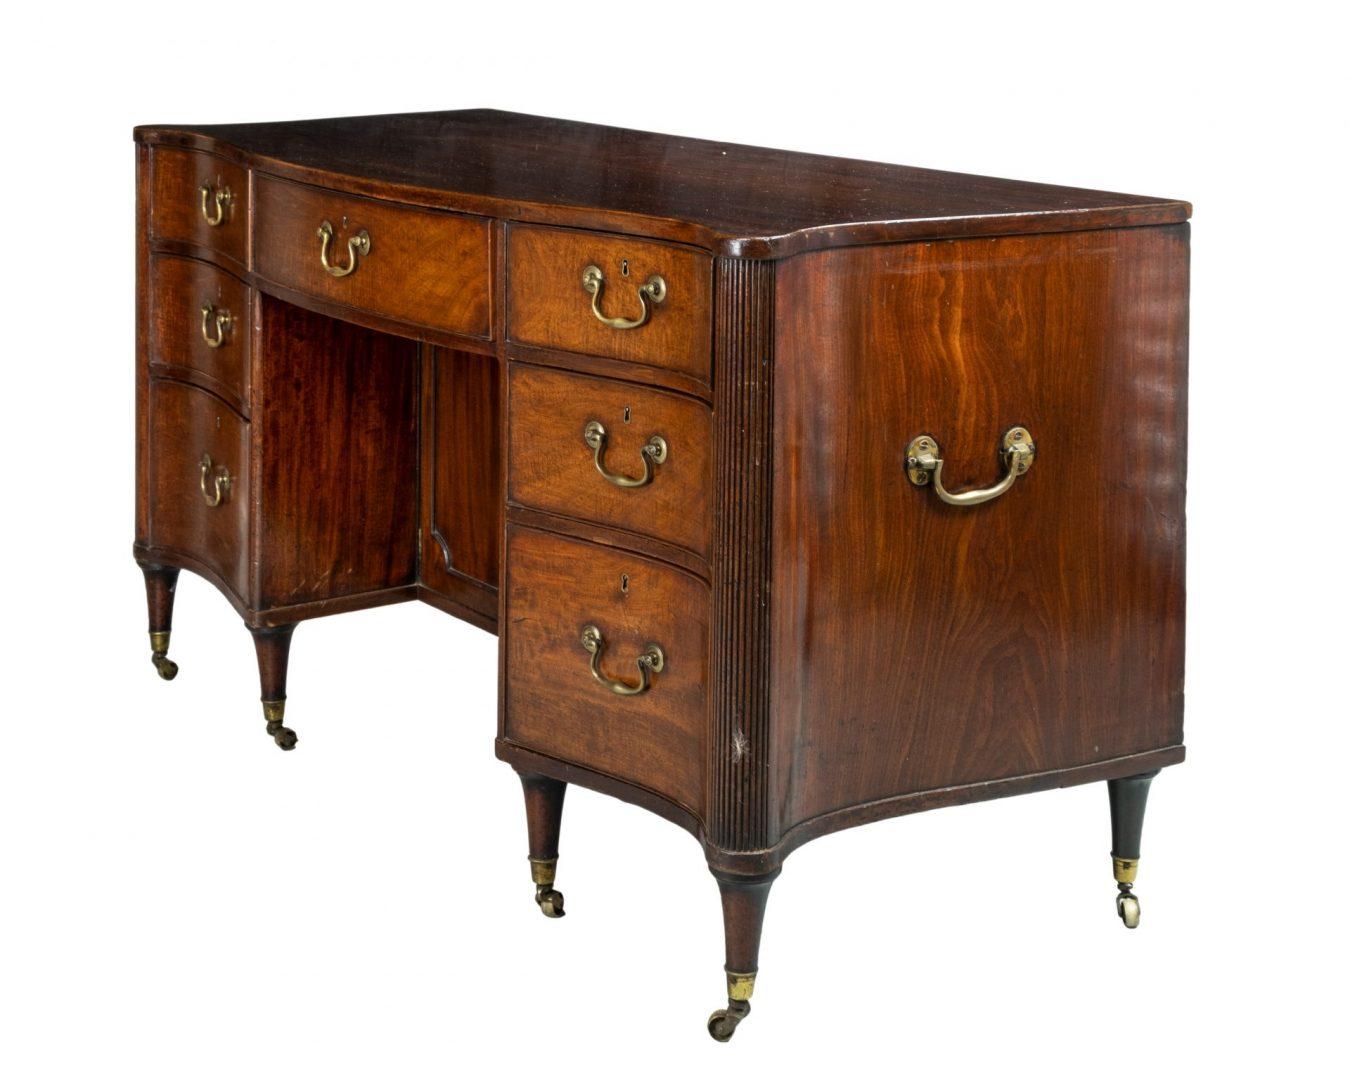 British Large Late 18th Century Hepplewhite Figured Mahogany Serpentine Kneehole Desk